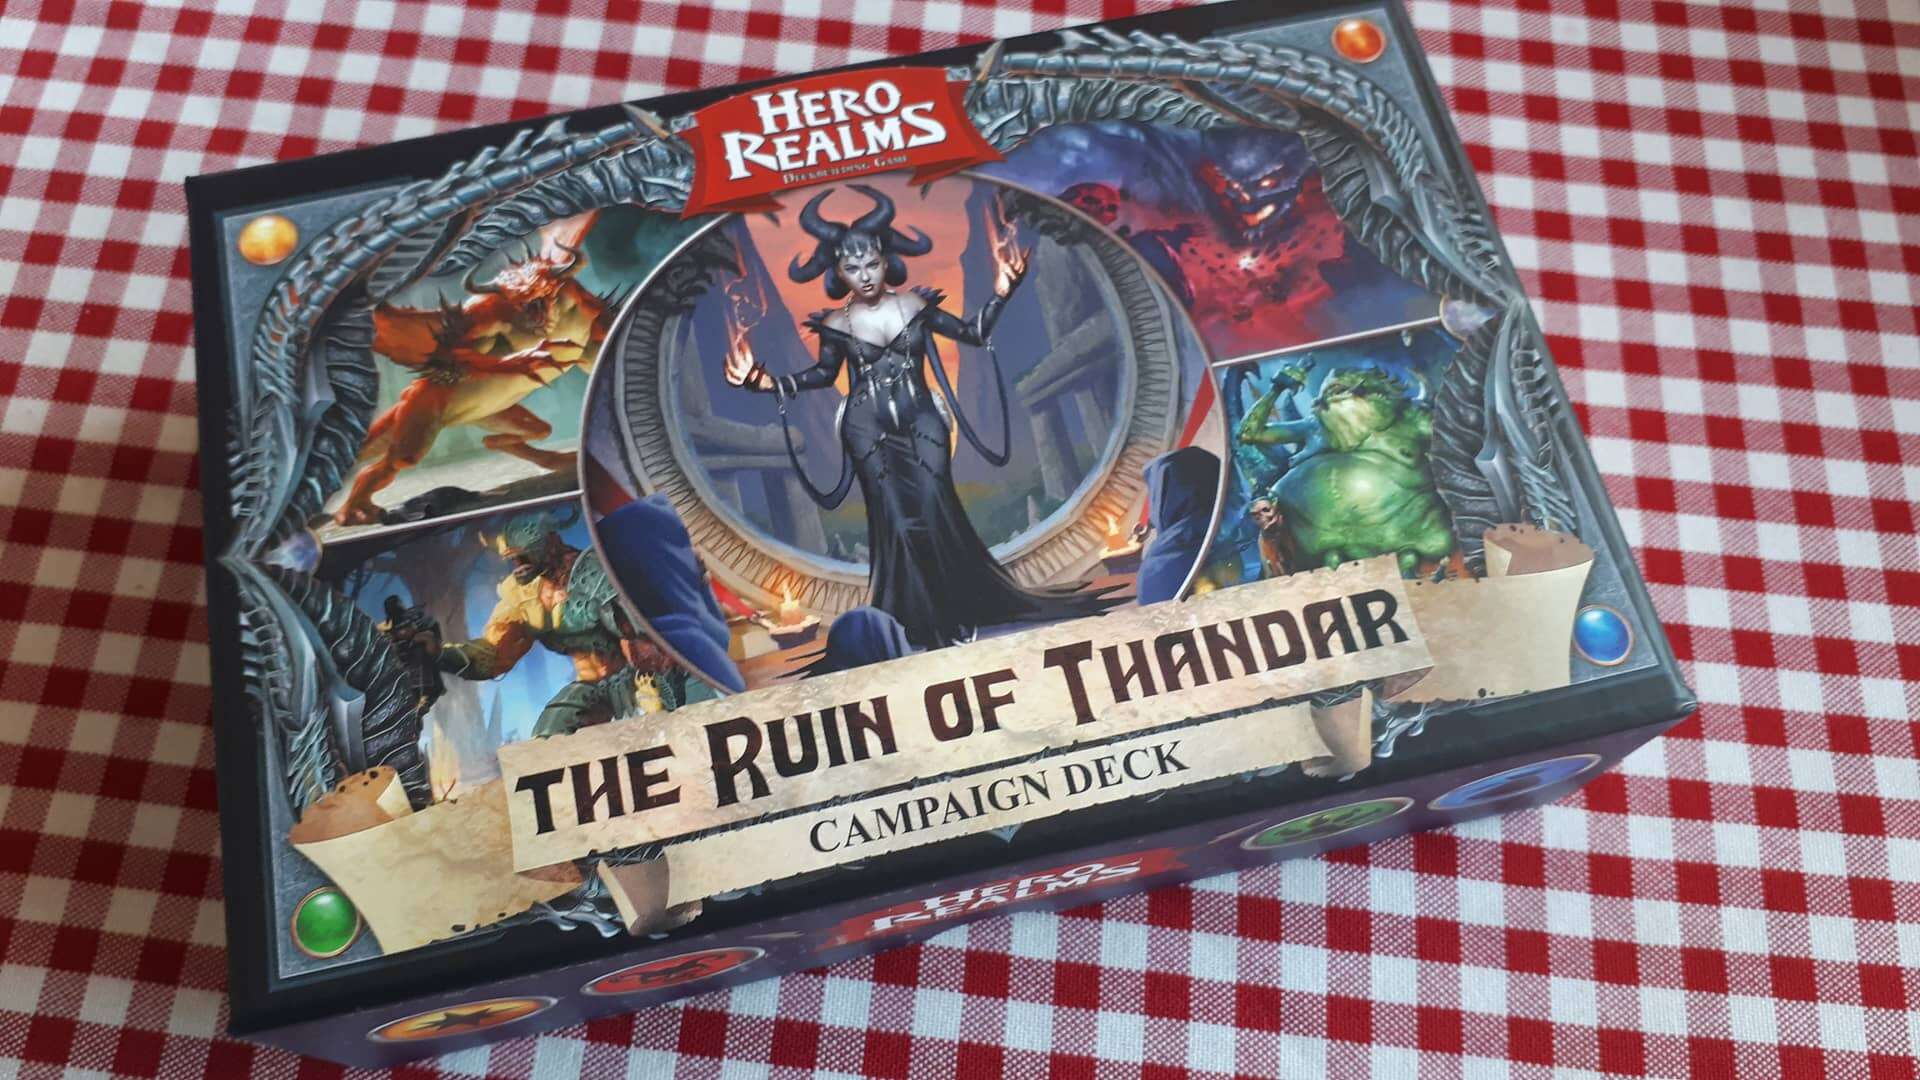 Hero Realms: The Ruins of Thandar and Boss Decks